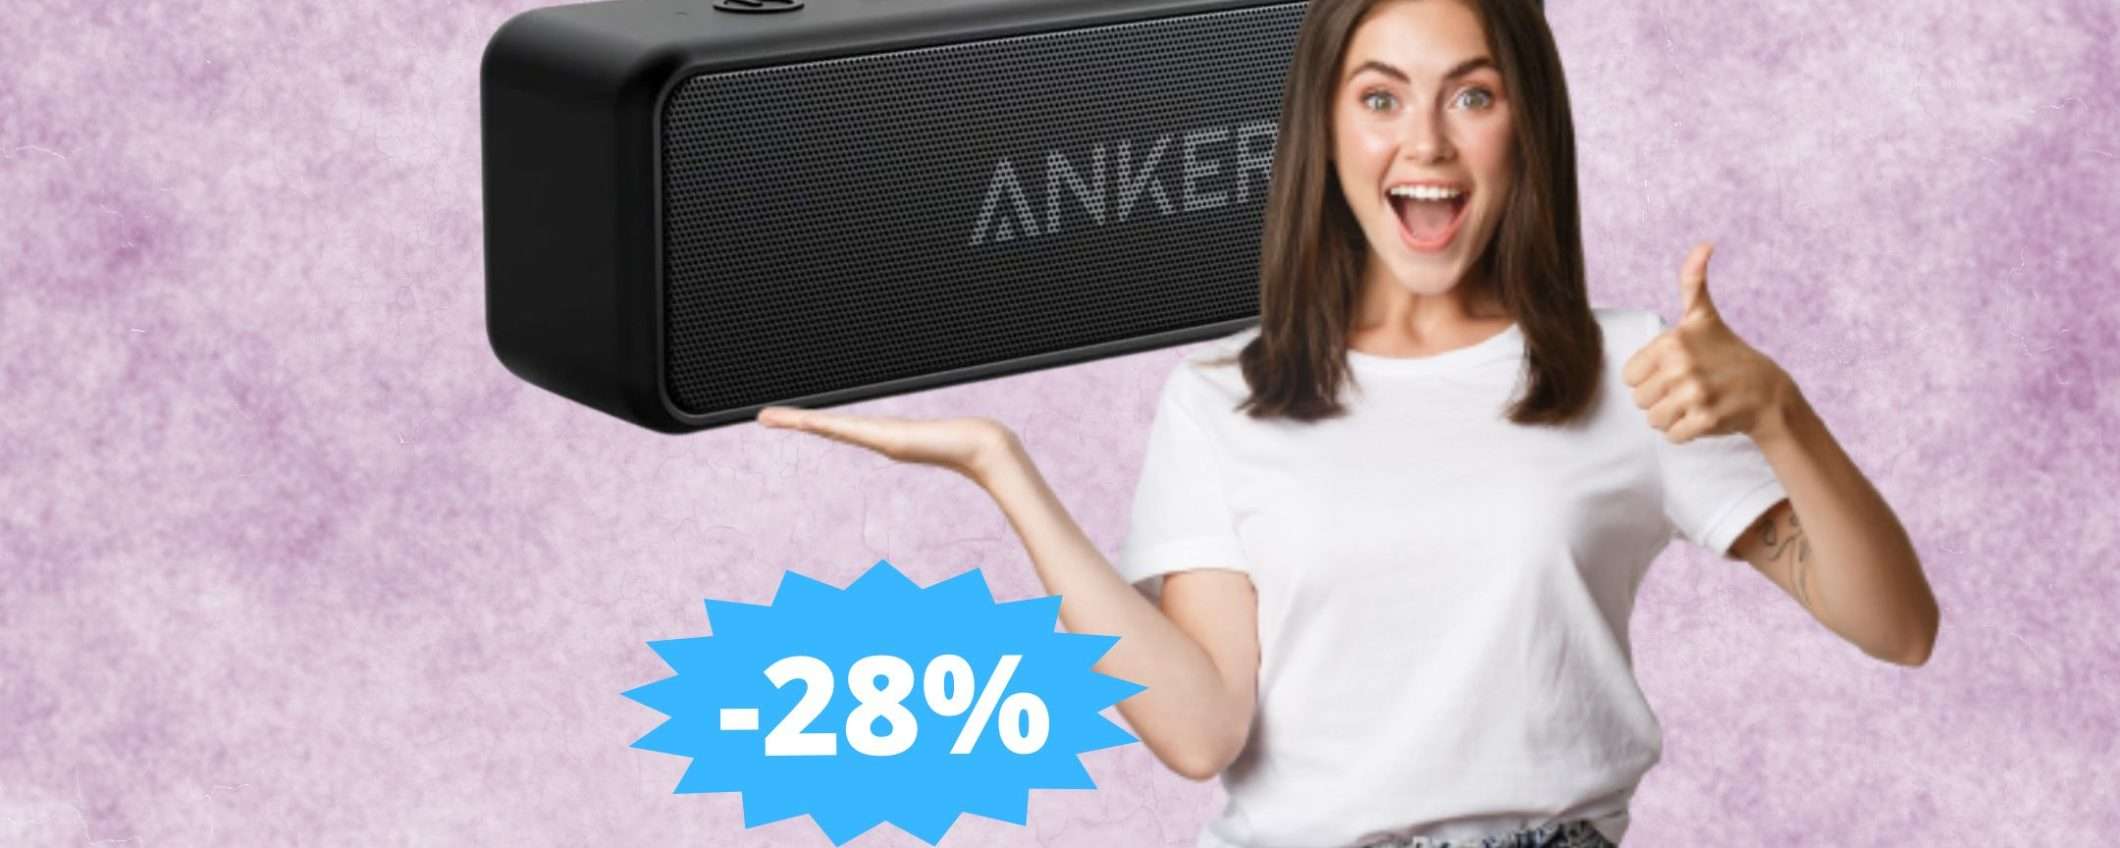 Speaker Anker SoundCore 2: sconto IMBATTIBILE del 28%